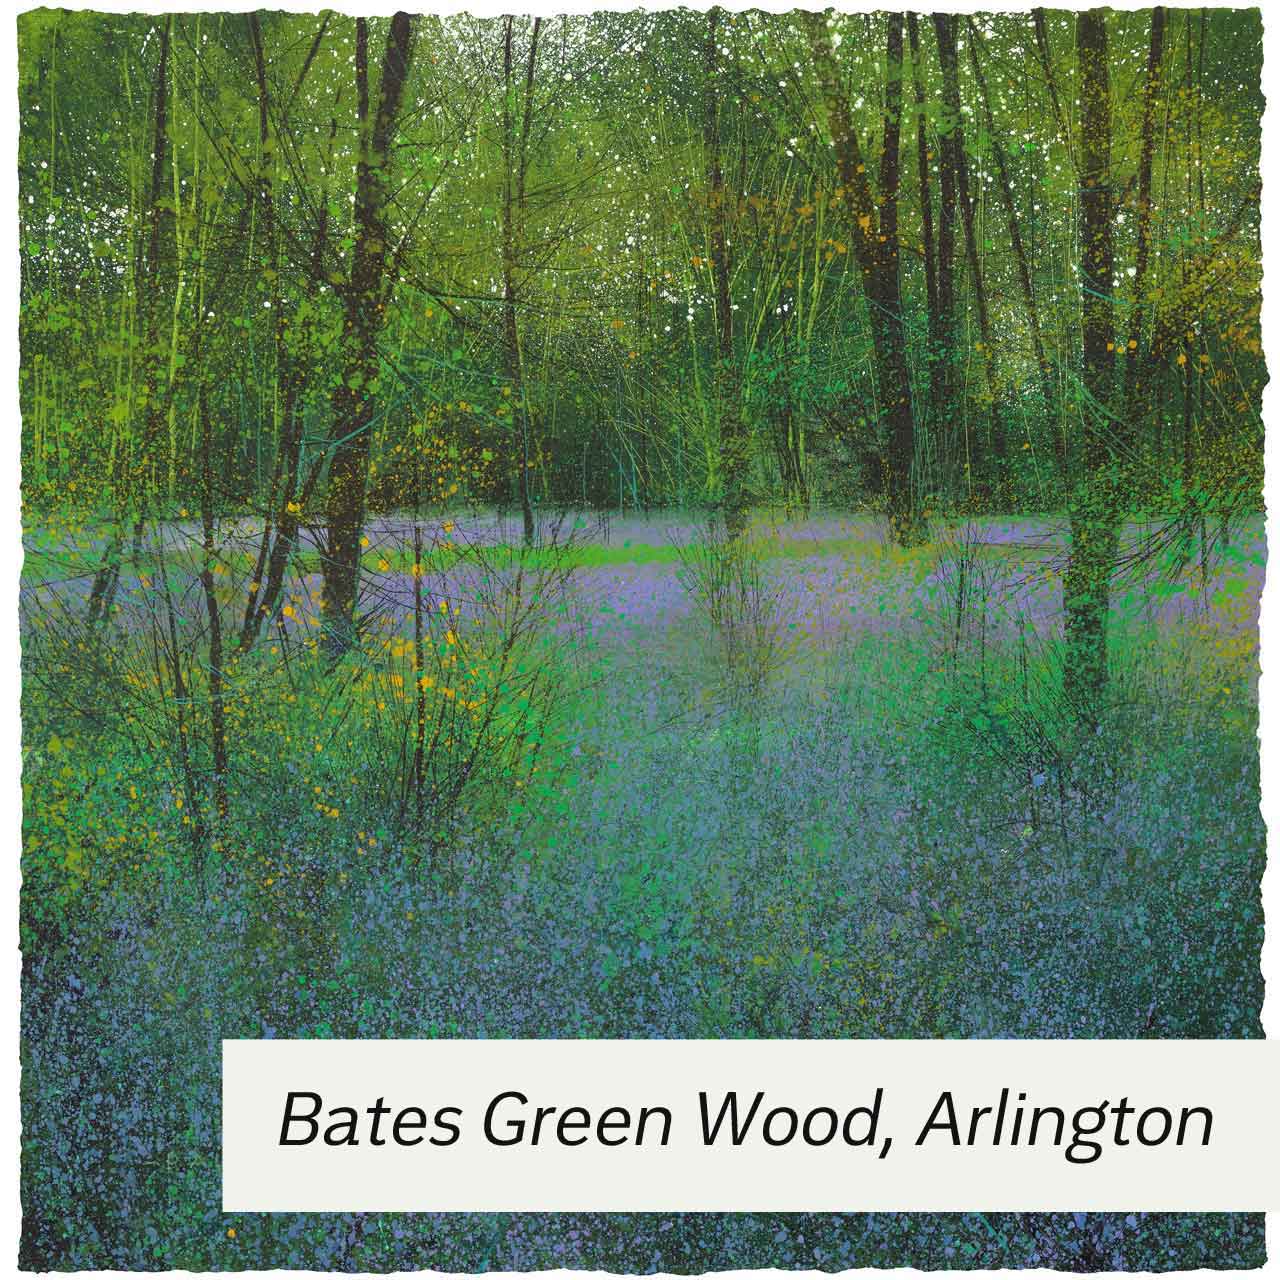 Bates Green Wood, Arlington by Paul Evans